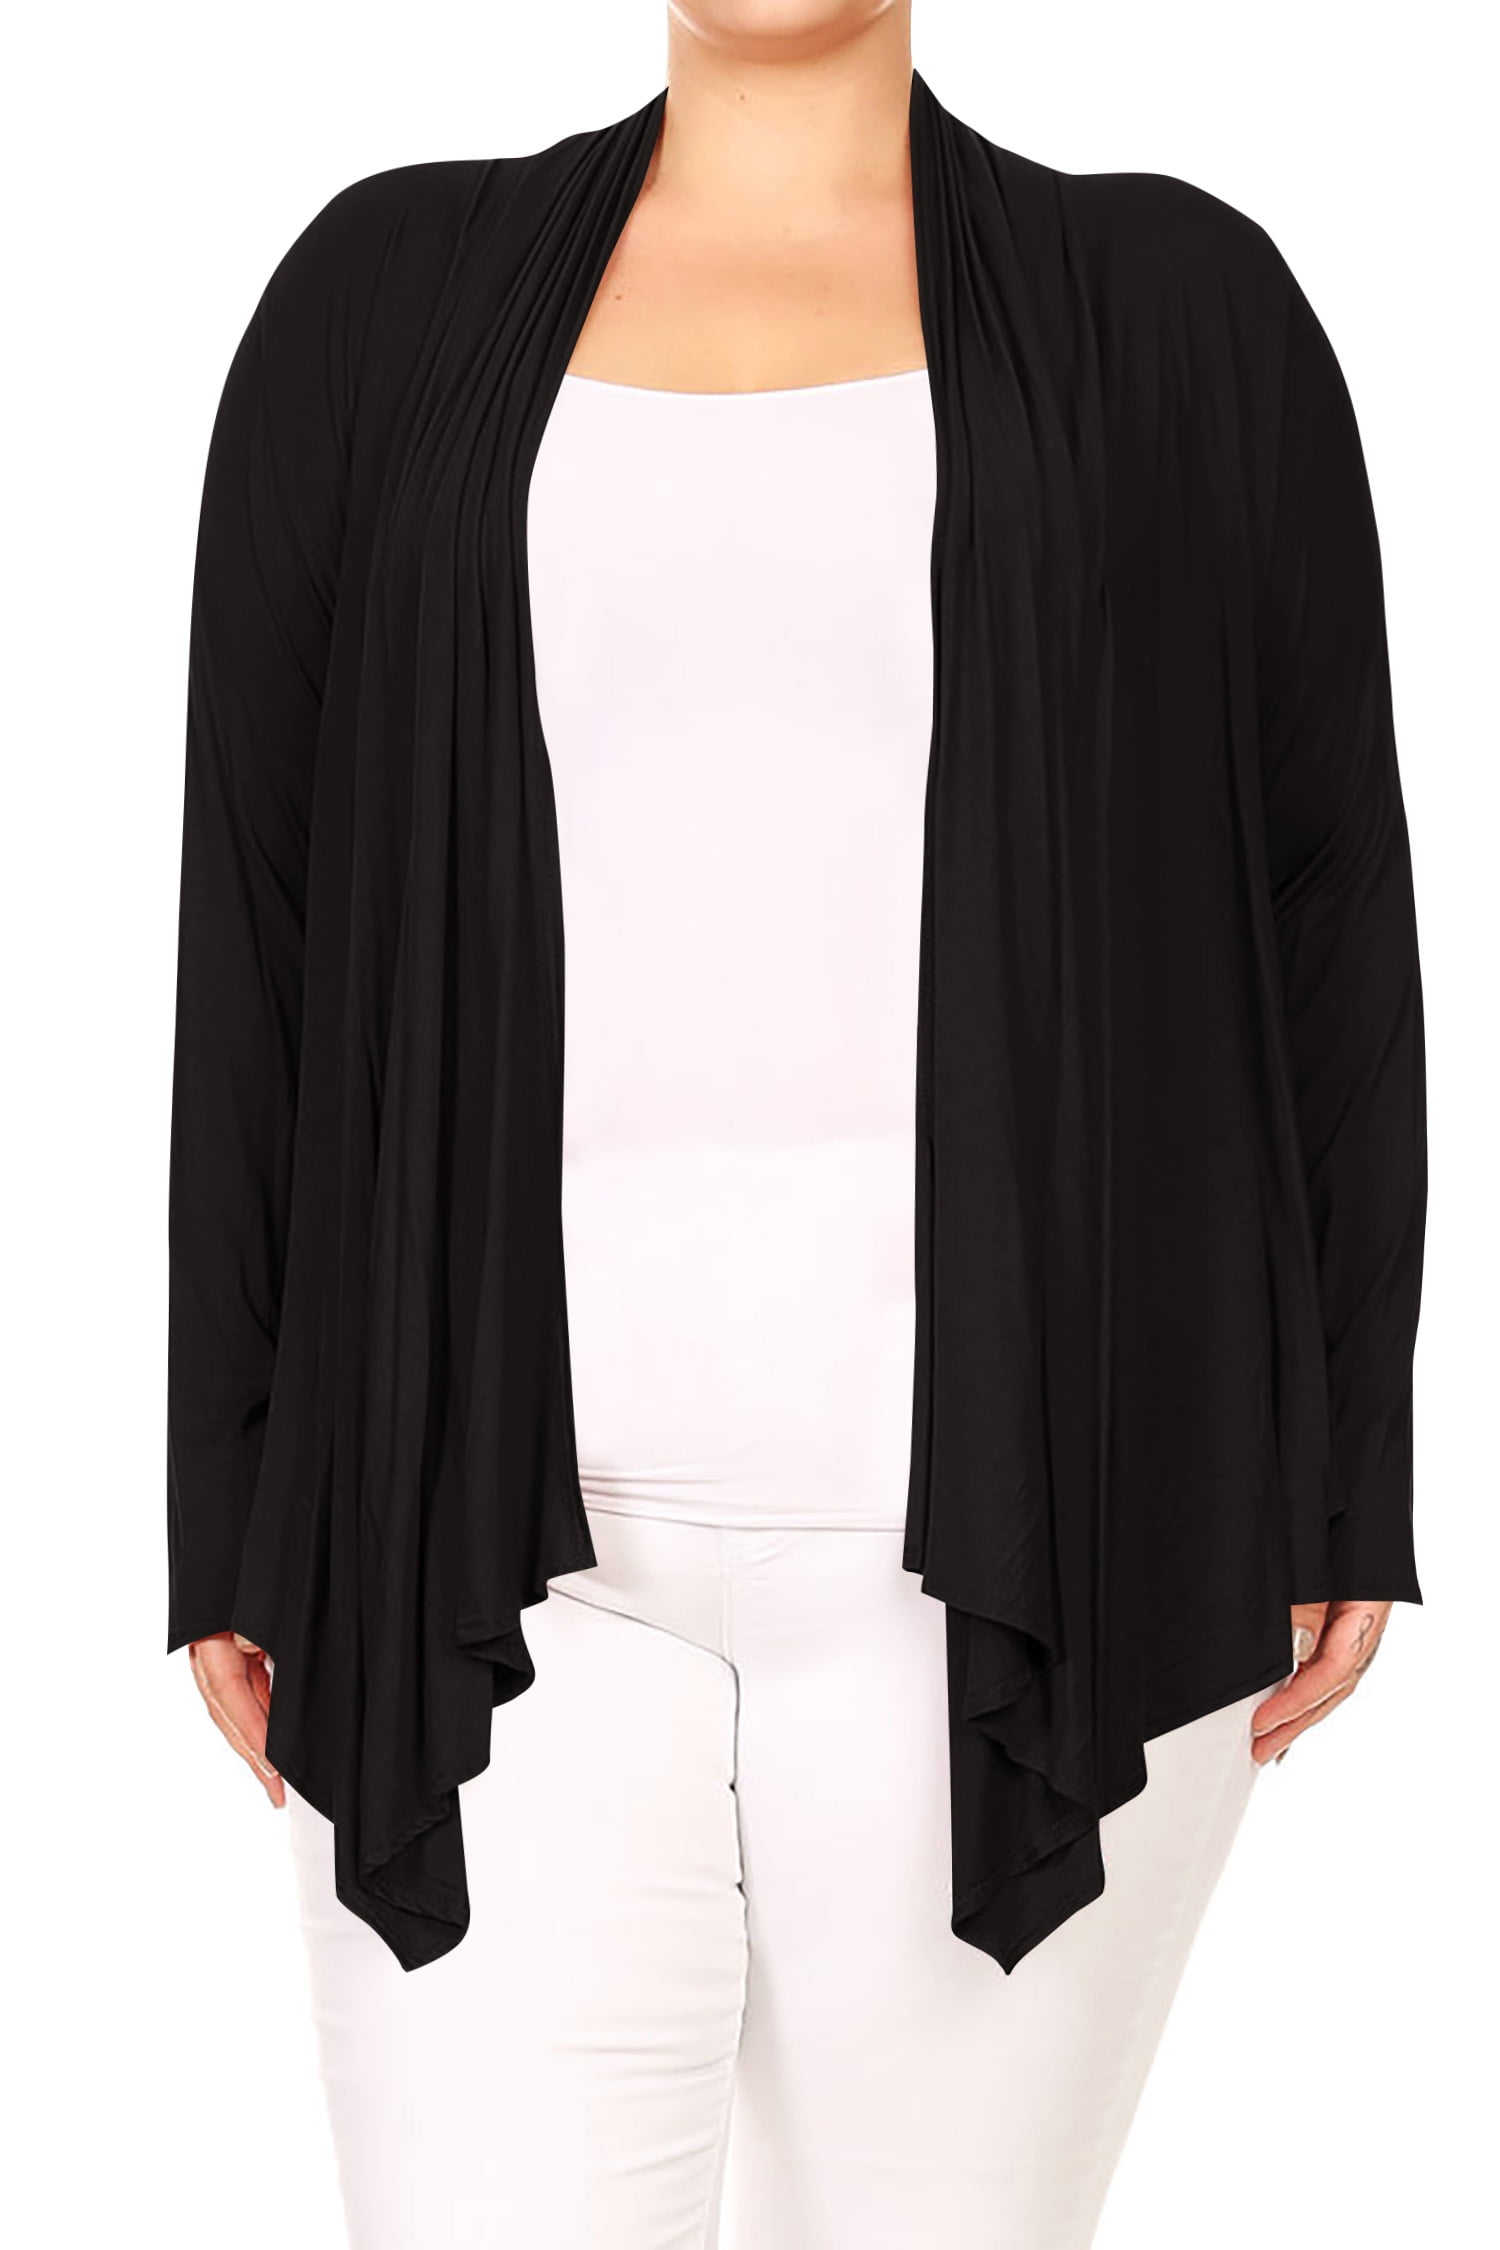 Women's Plus Size Casual Long Sleeve Draped Open Cardigan - Walmart.com